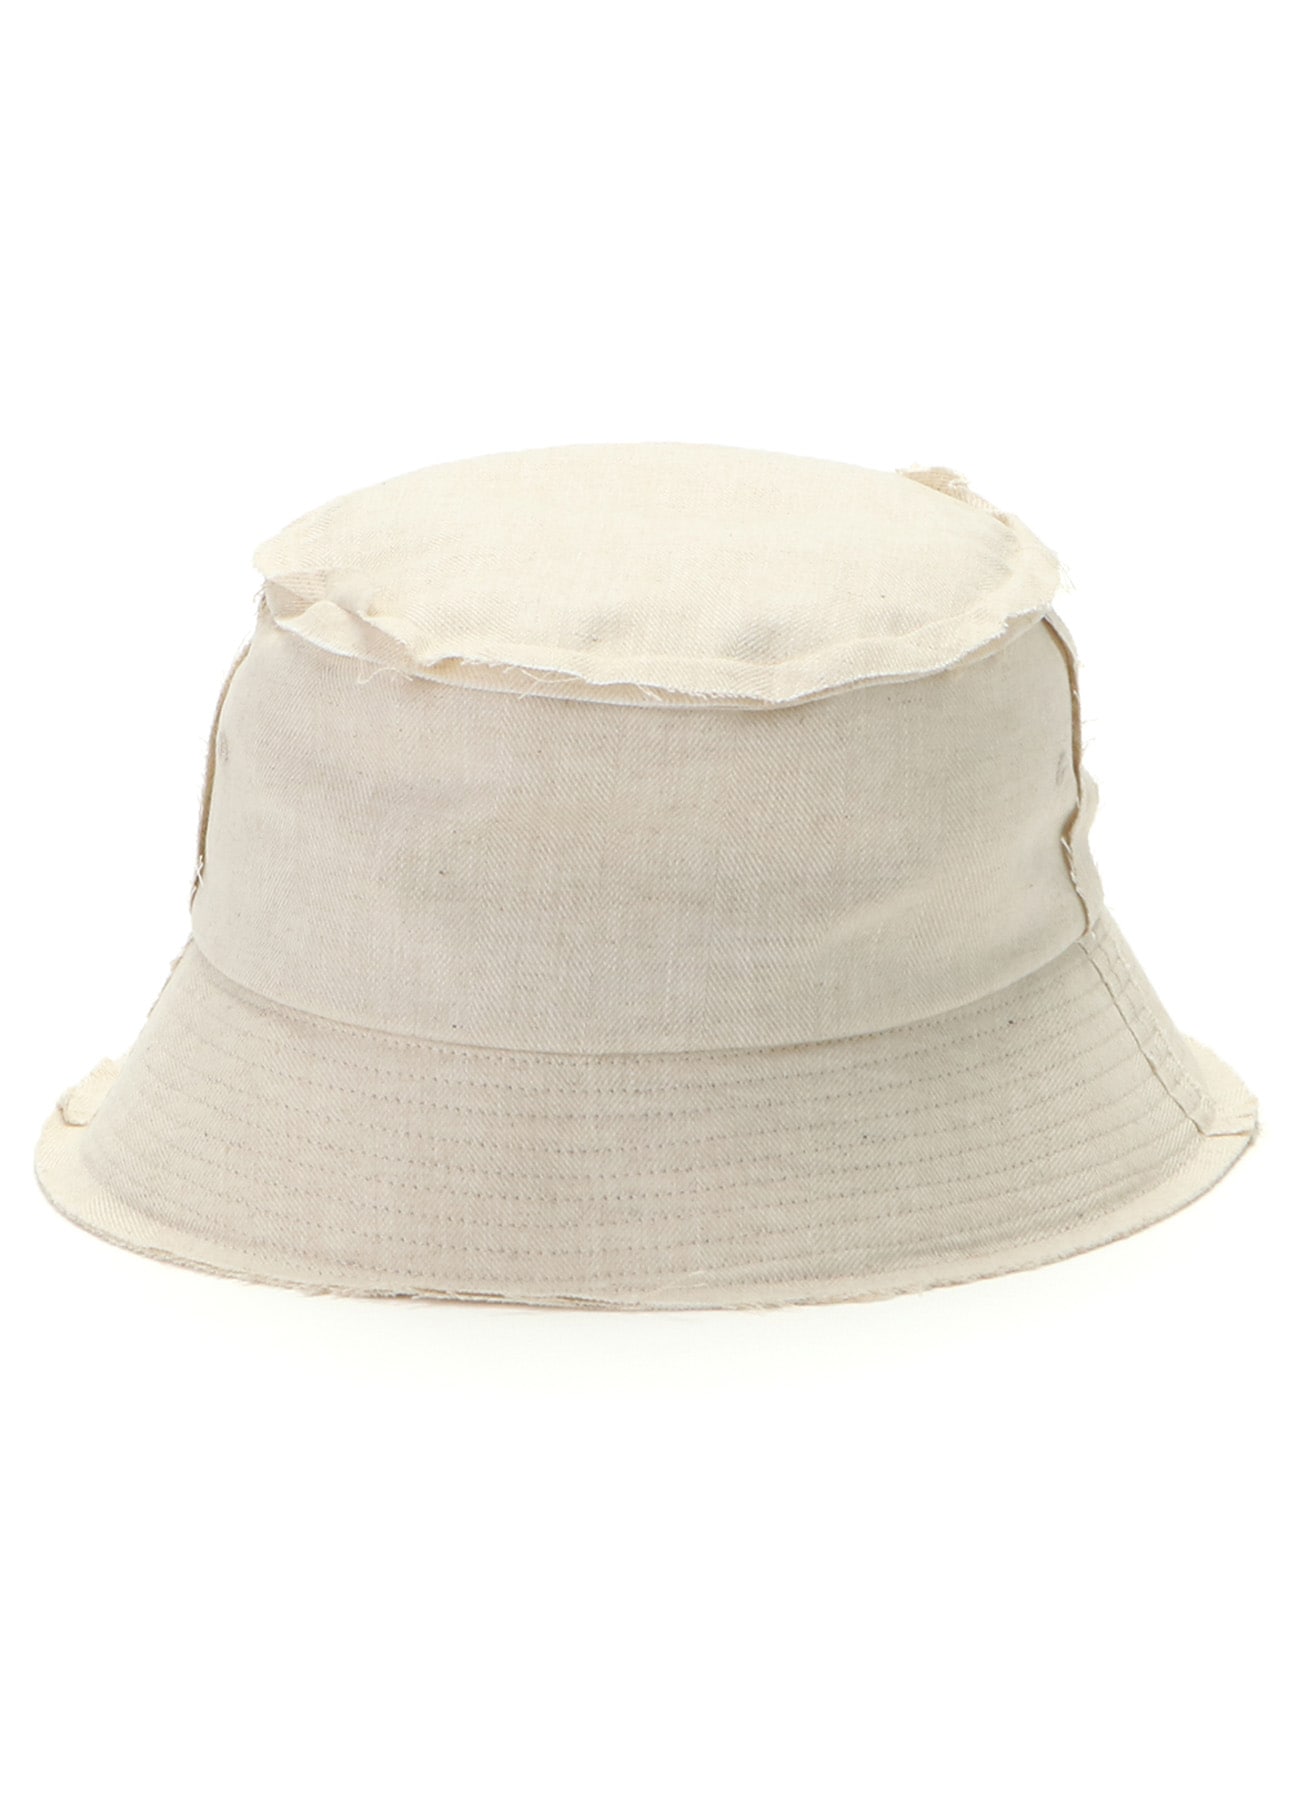 Li/C Washer Twill Cut Off Bucket Hat